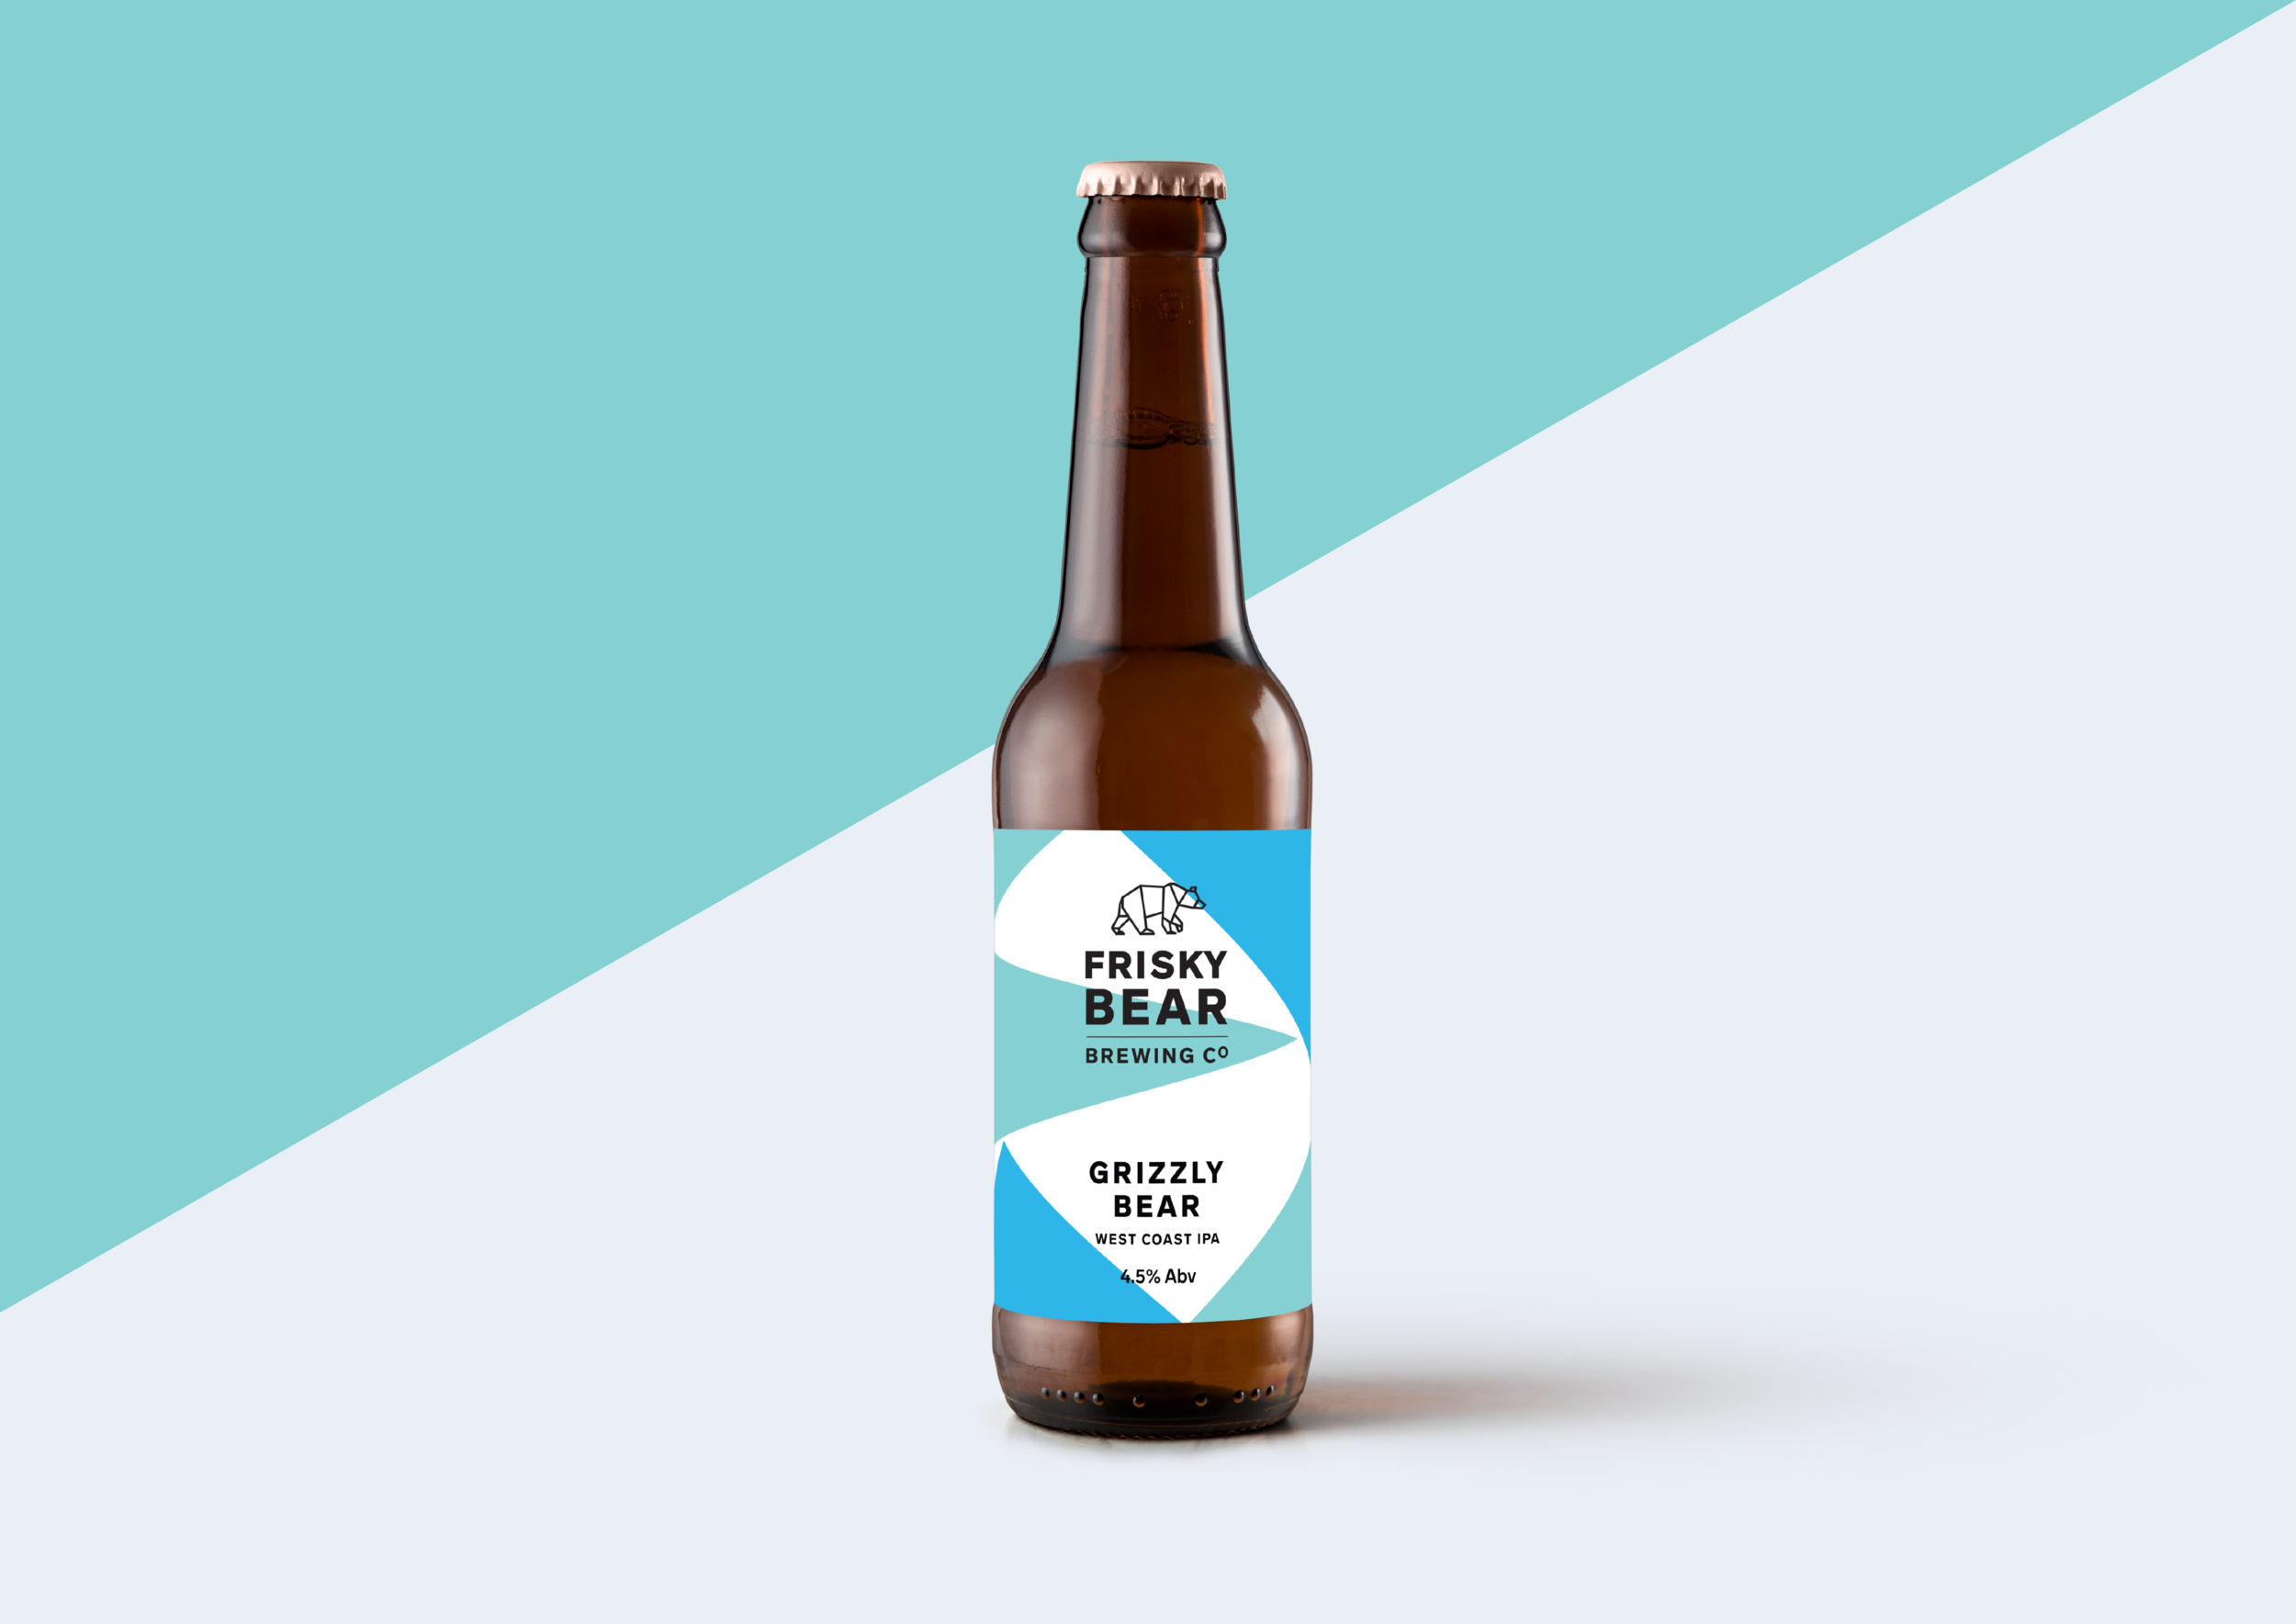 Drink packaging design - A brown beer bottle of Frisky Bear Brewing Co 